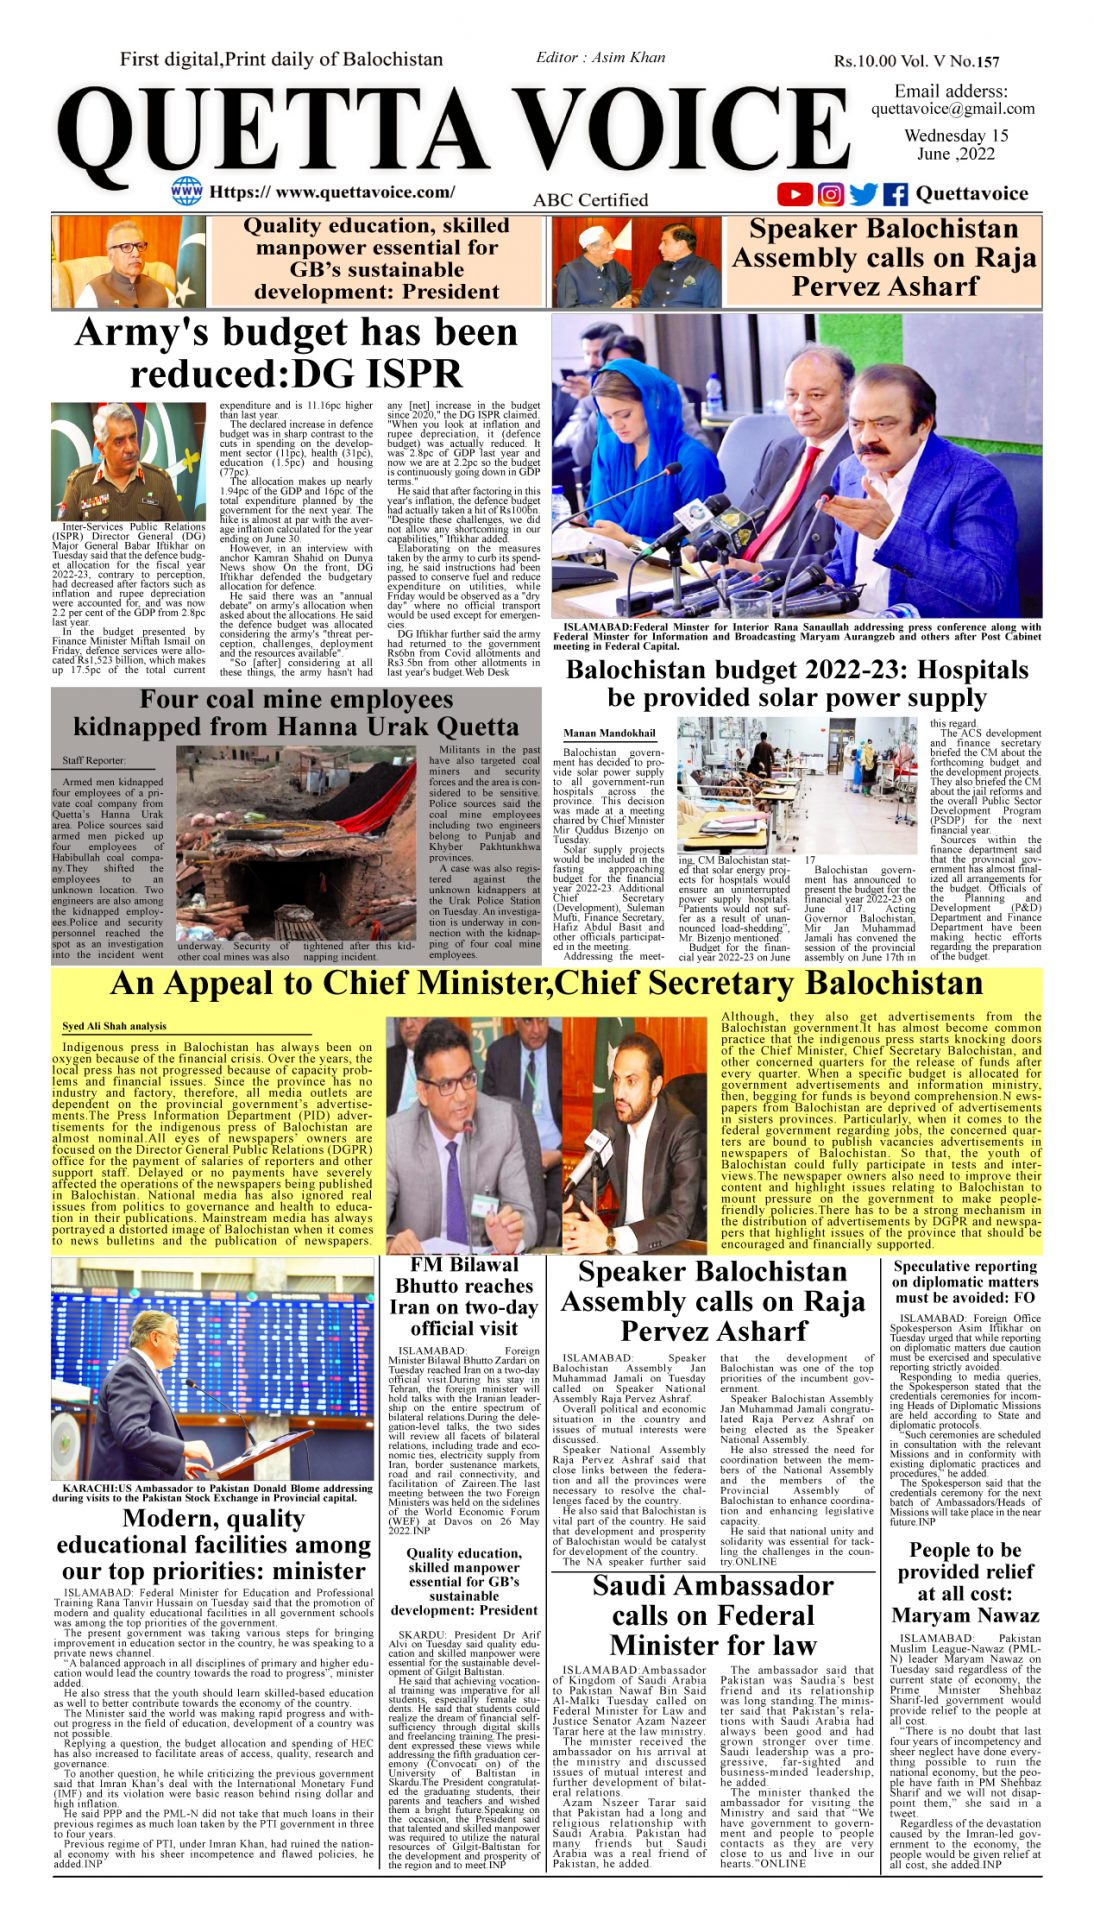 Quetta Voice Newspaper Wednesday June 15 2022